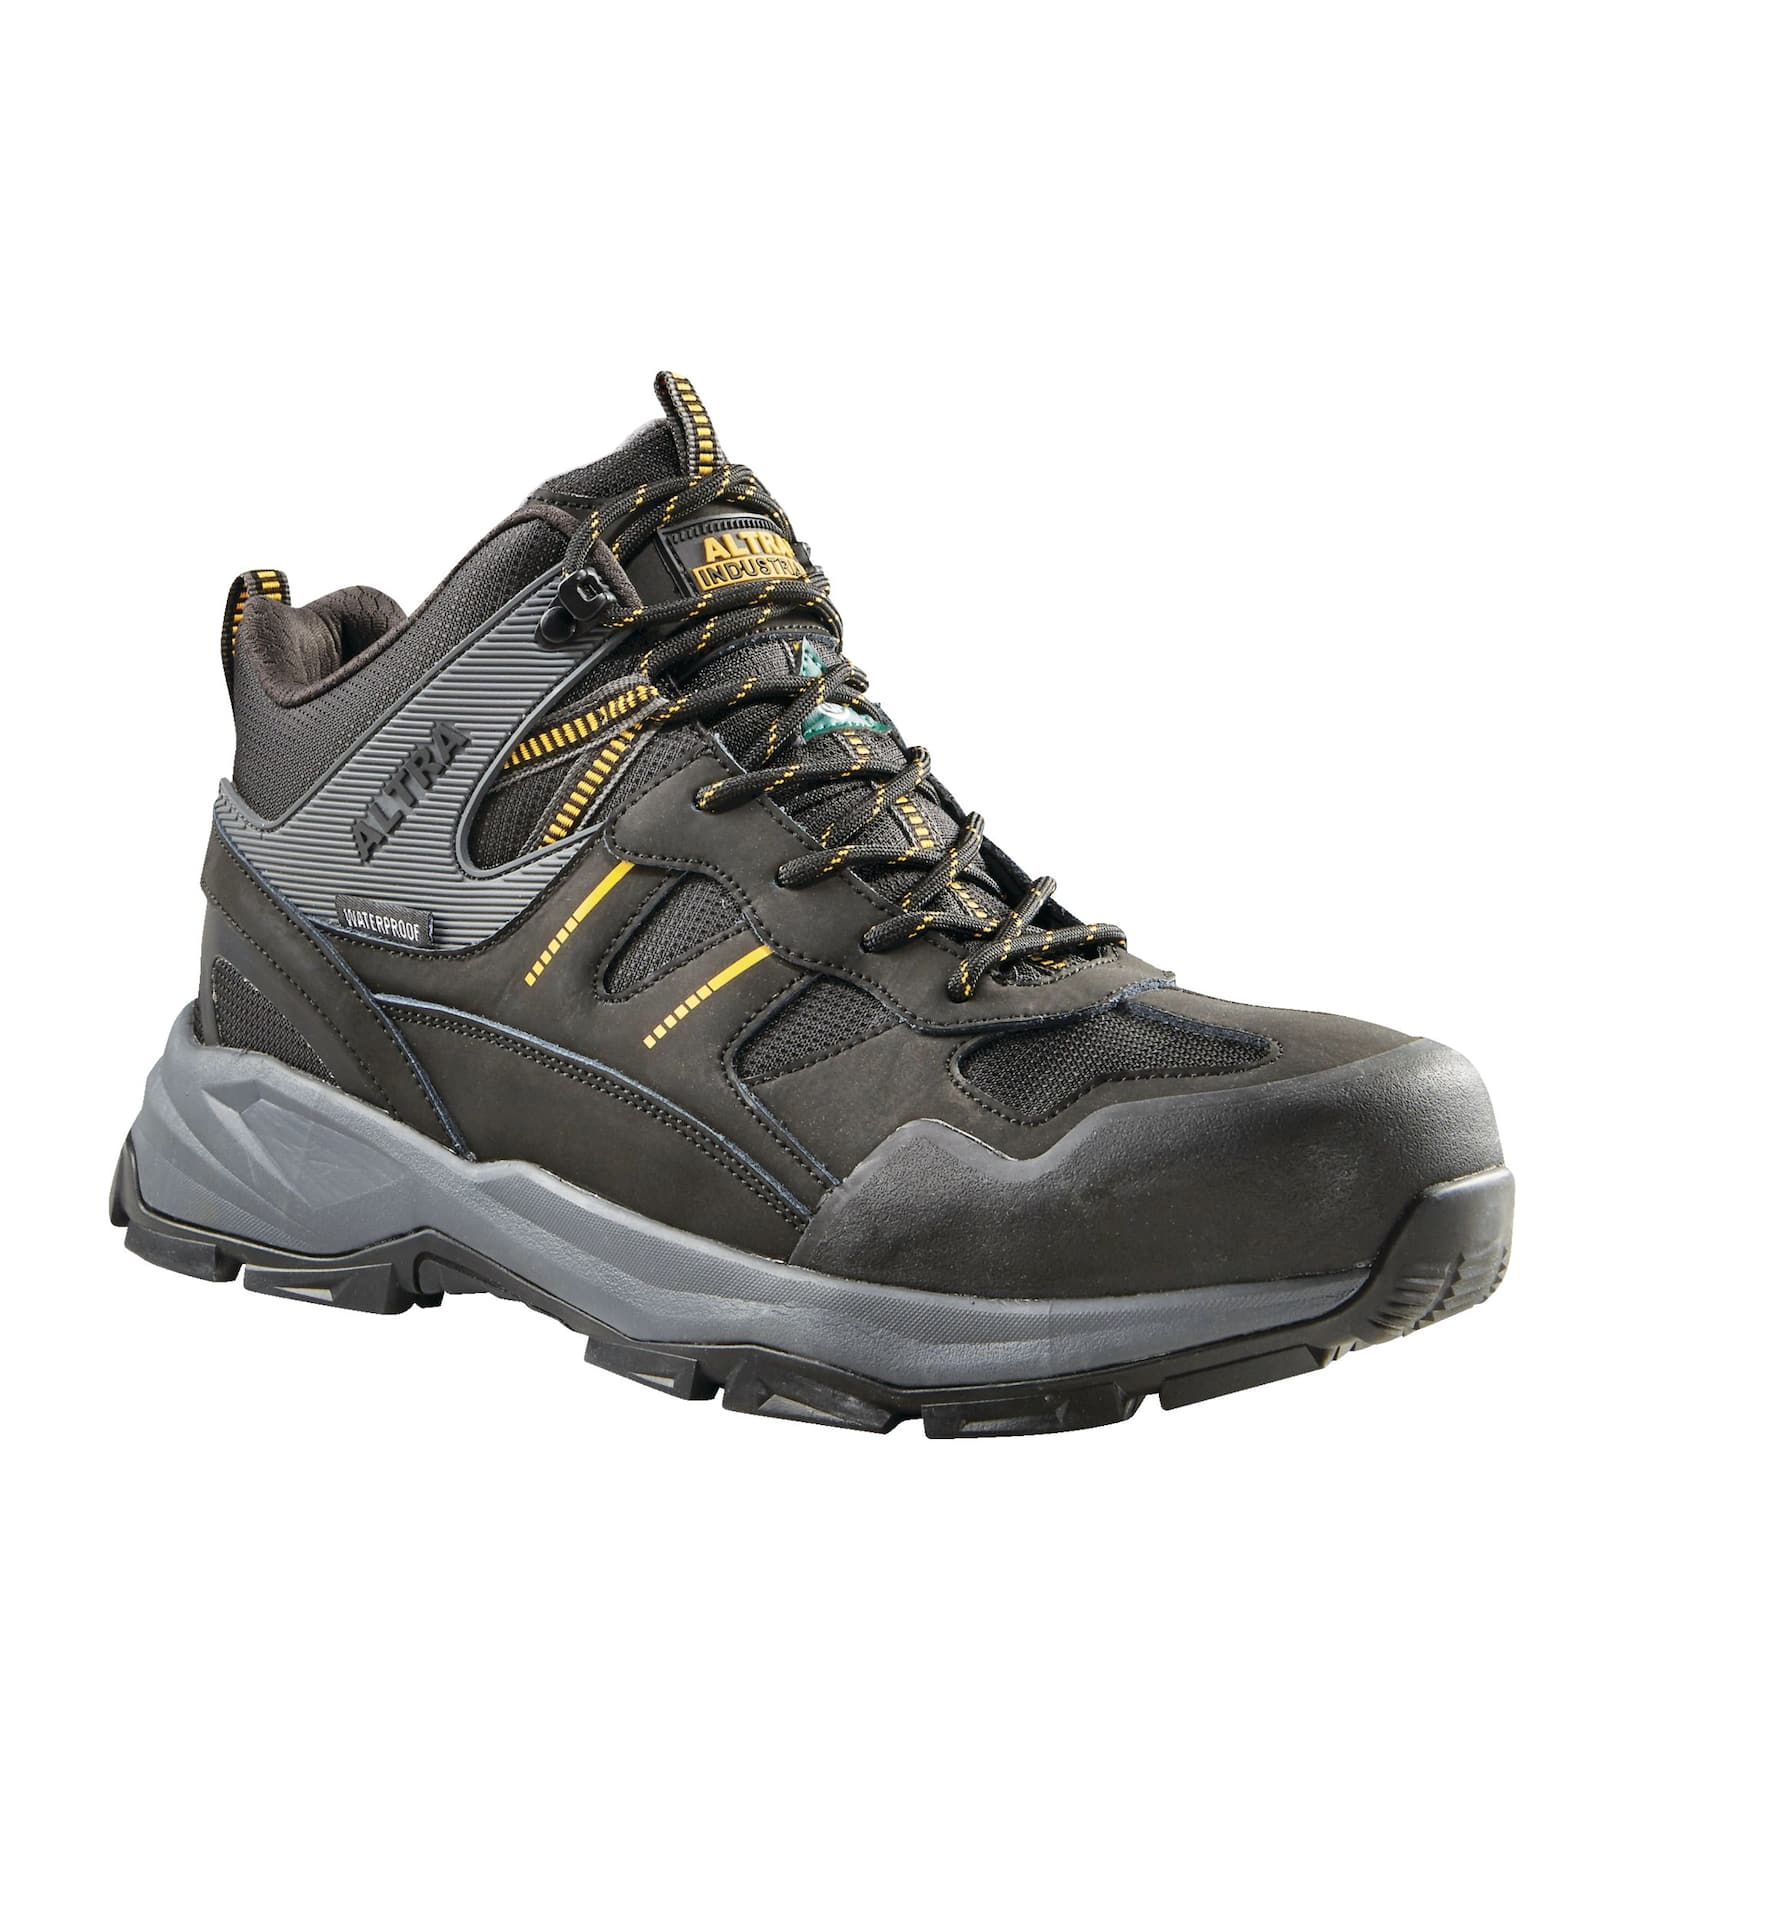 Altra Kane Men's CSA Mid-Cut Waterproof Steel Toe Hiker Work Boots, Black